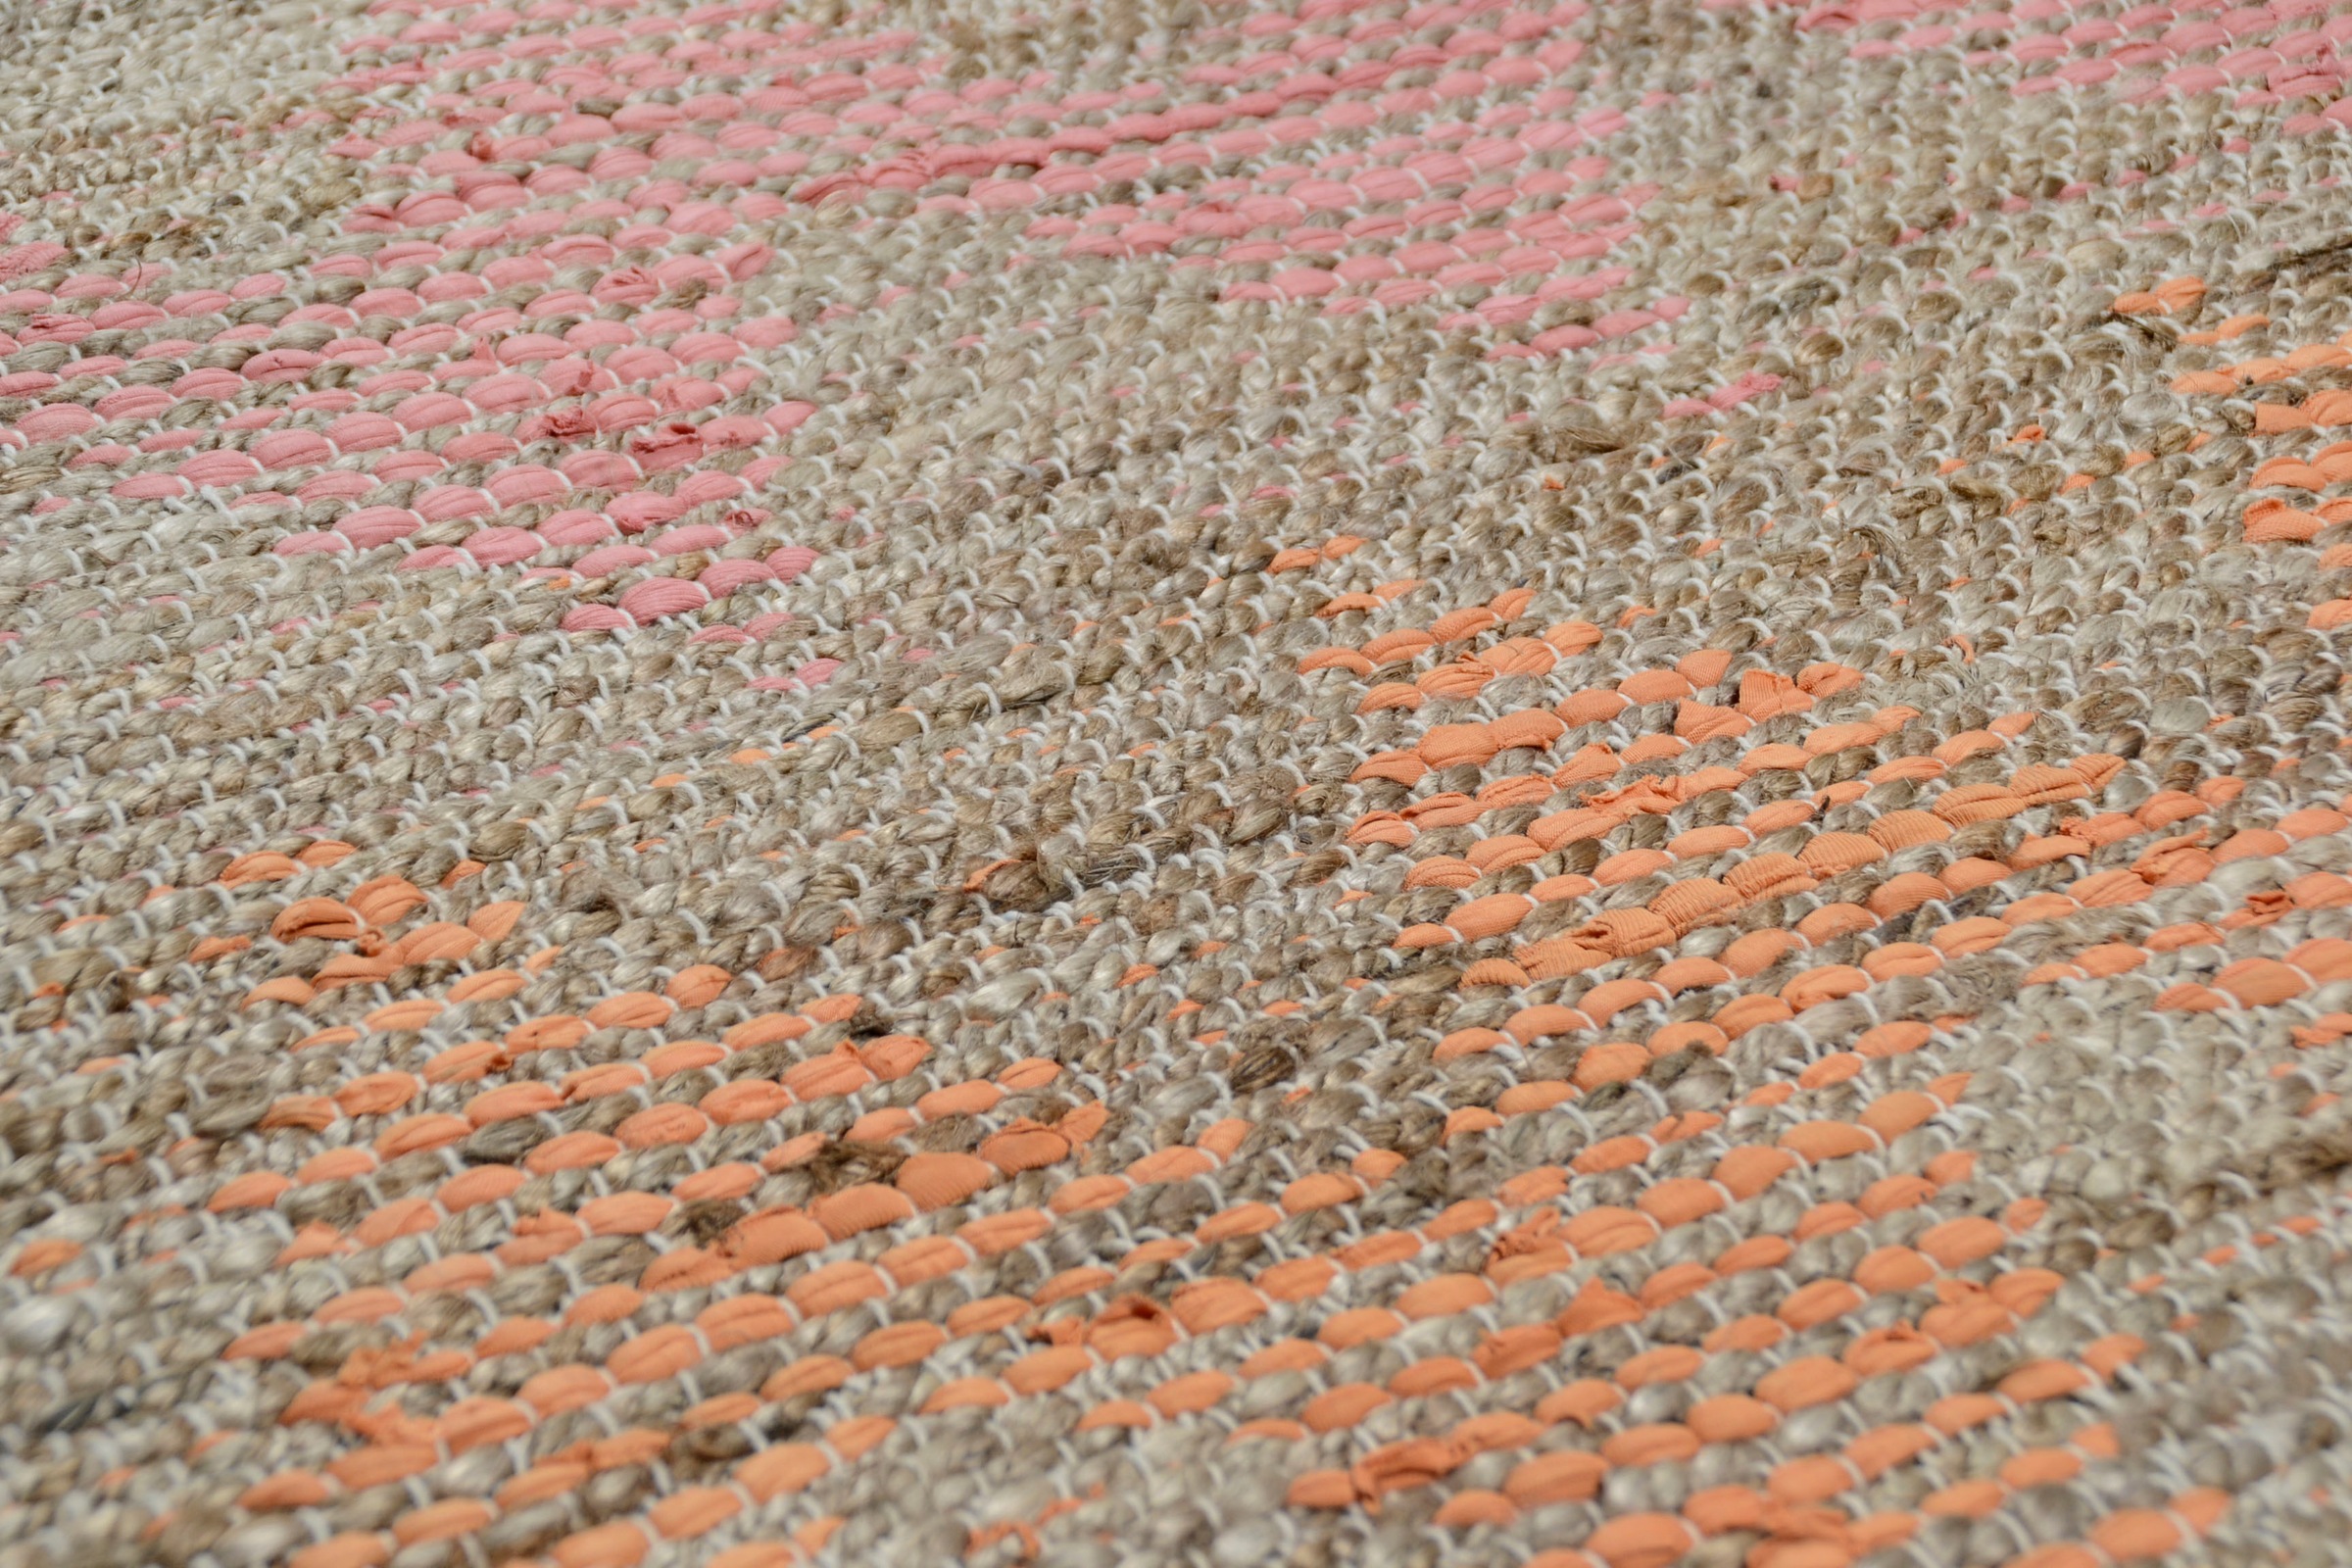 TOM TAILOR HOME Teppich »Pastel Zigzag«, rechteckig, Flachgewebe, handgewebt, Material: 60% Baumwolle, 40% Jute